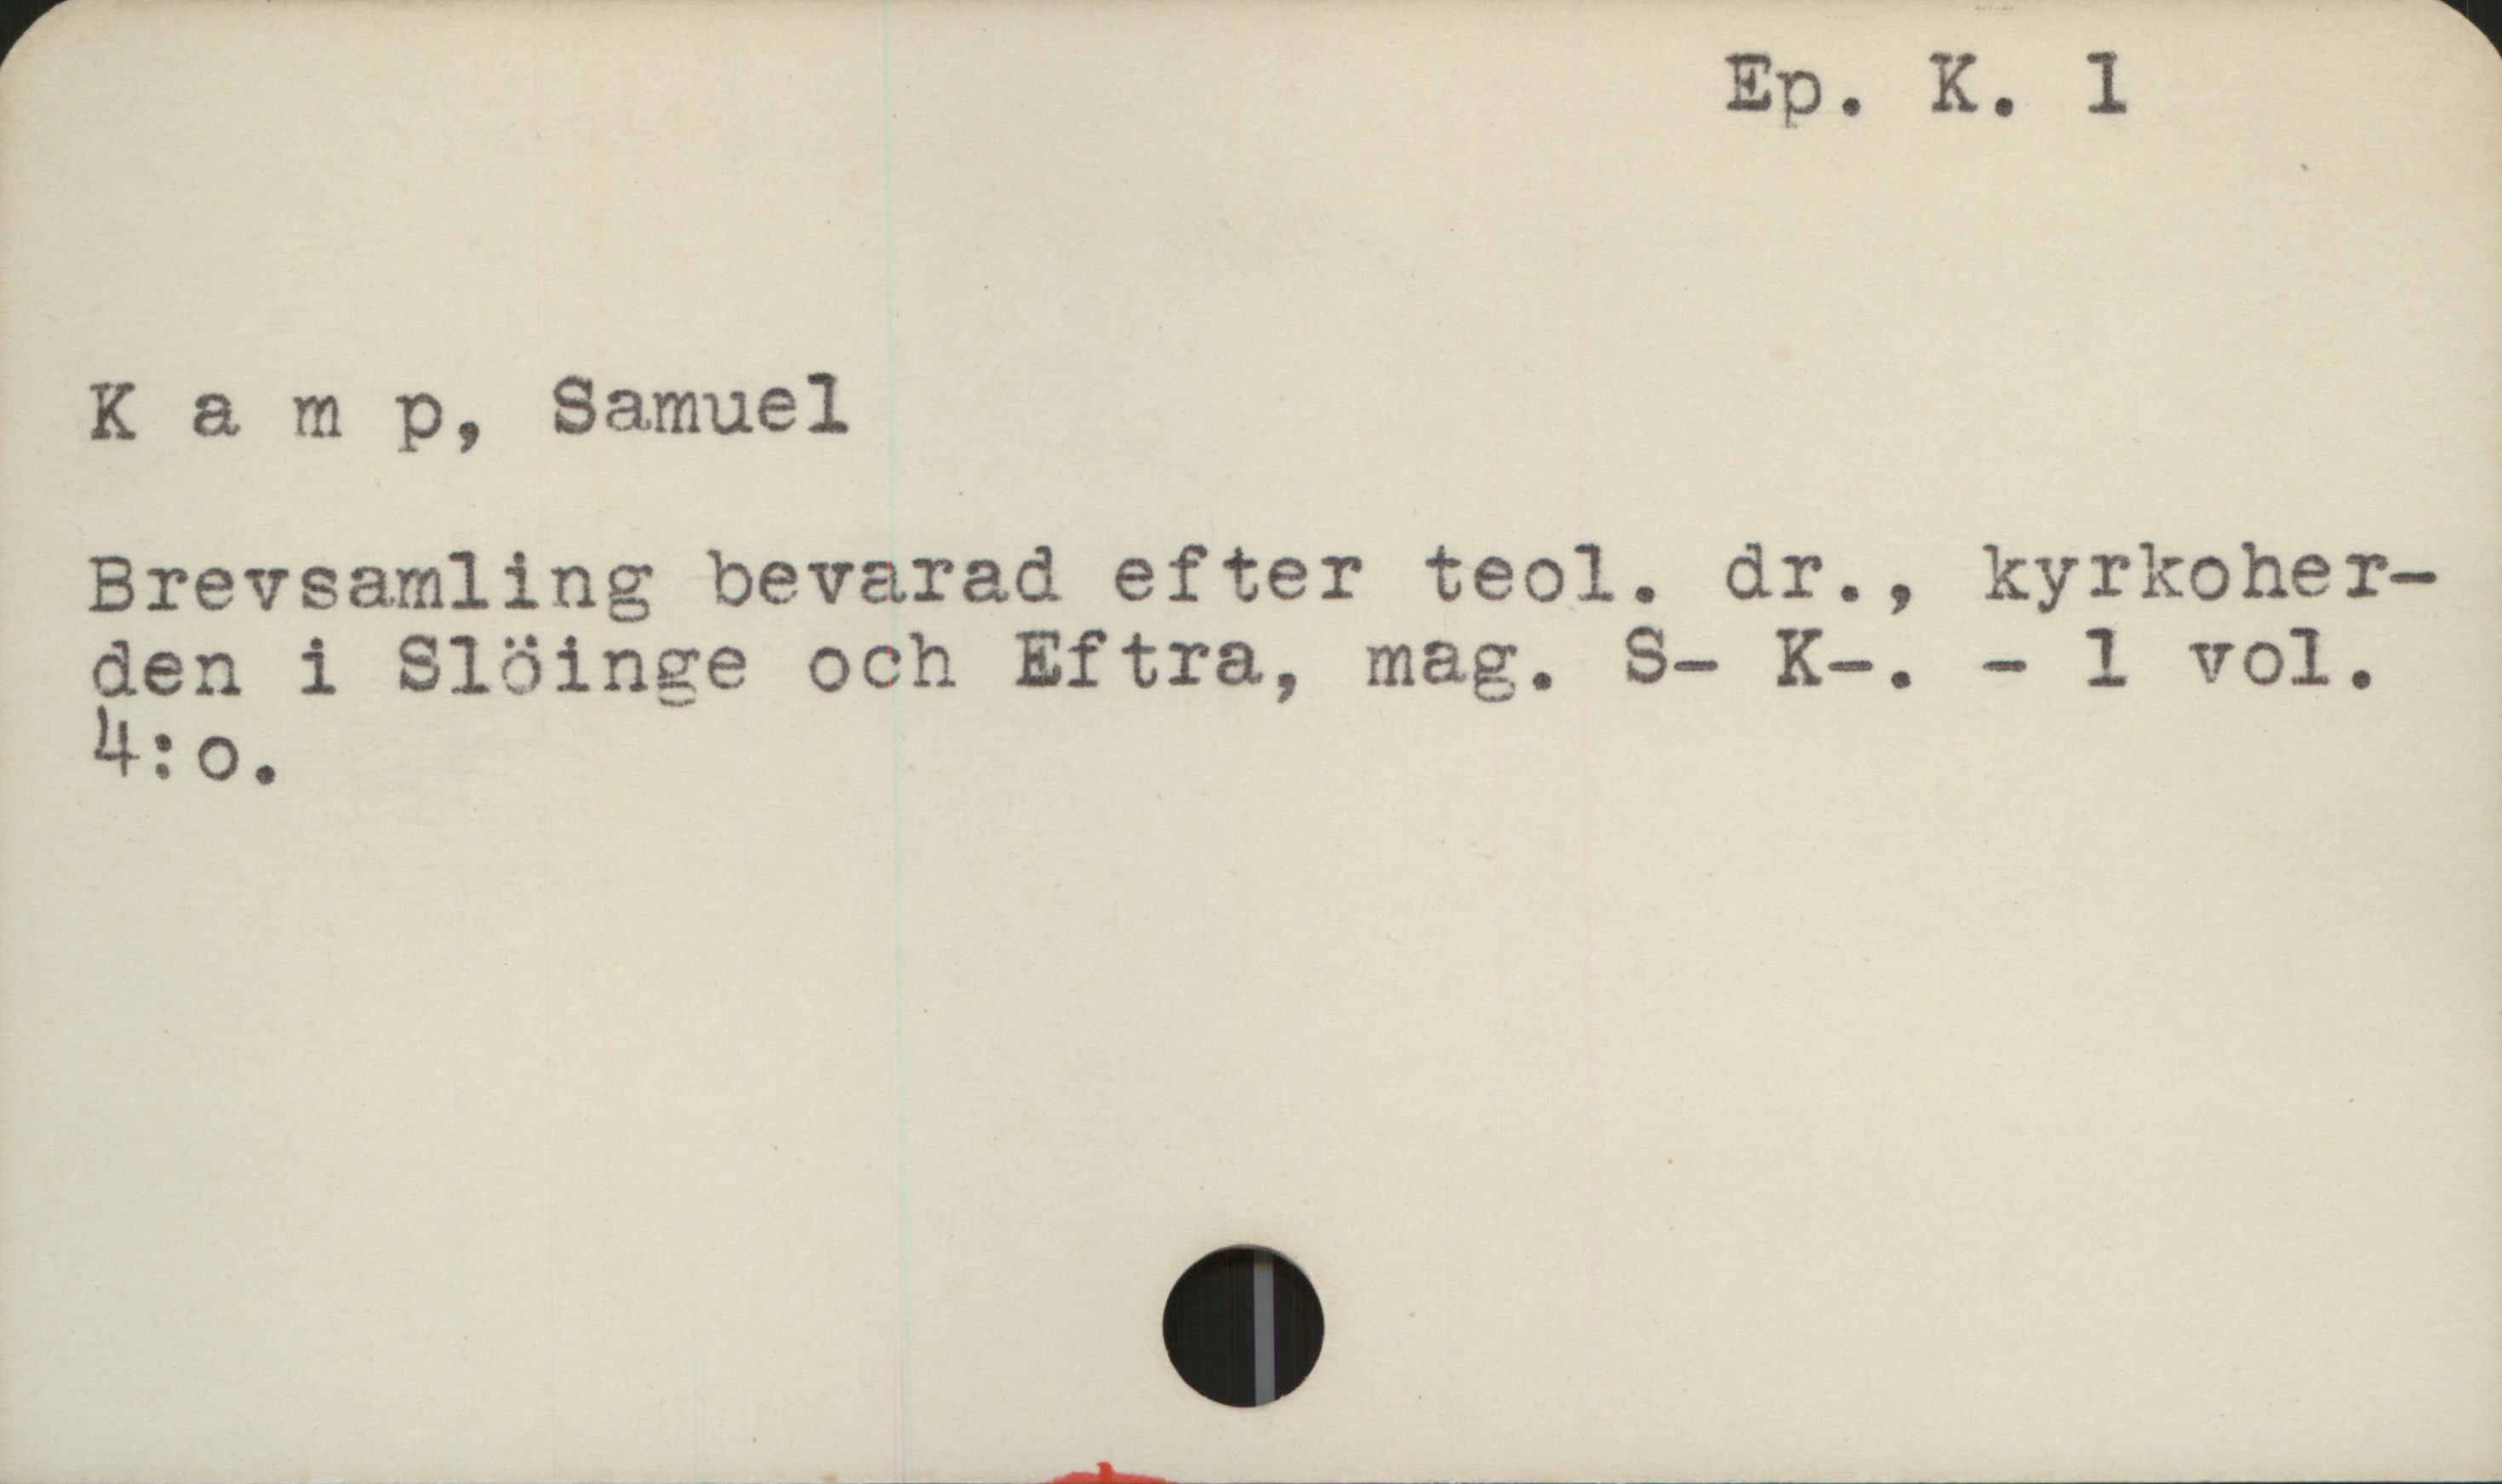  Ep. K. 1
Kamp, Samuel
Breysamling bevarad efter teol. dr., kyrkoher-
gen i Slöinge och Eftra, mag. S- K-. - 1 vol.
: O.

